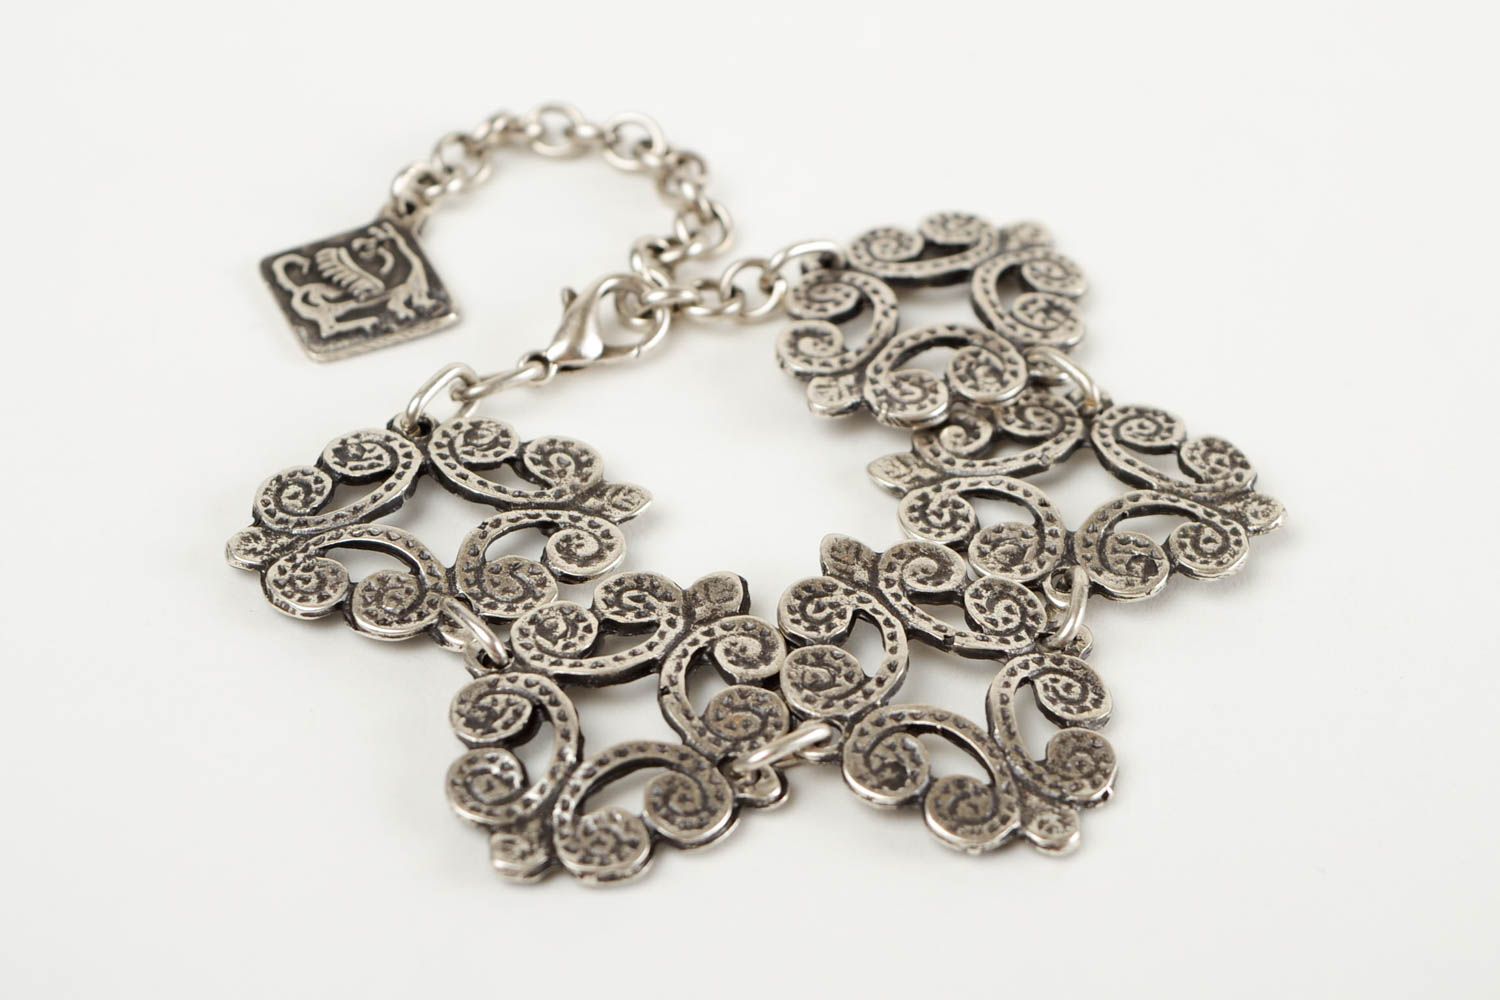 Stylish handmade metal bracelet wrist bracelet designs accessories for girls photo 4